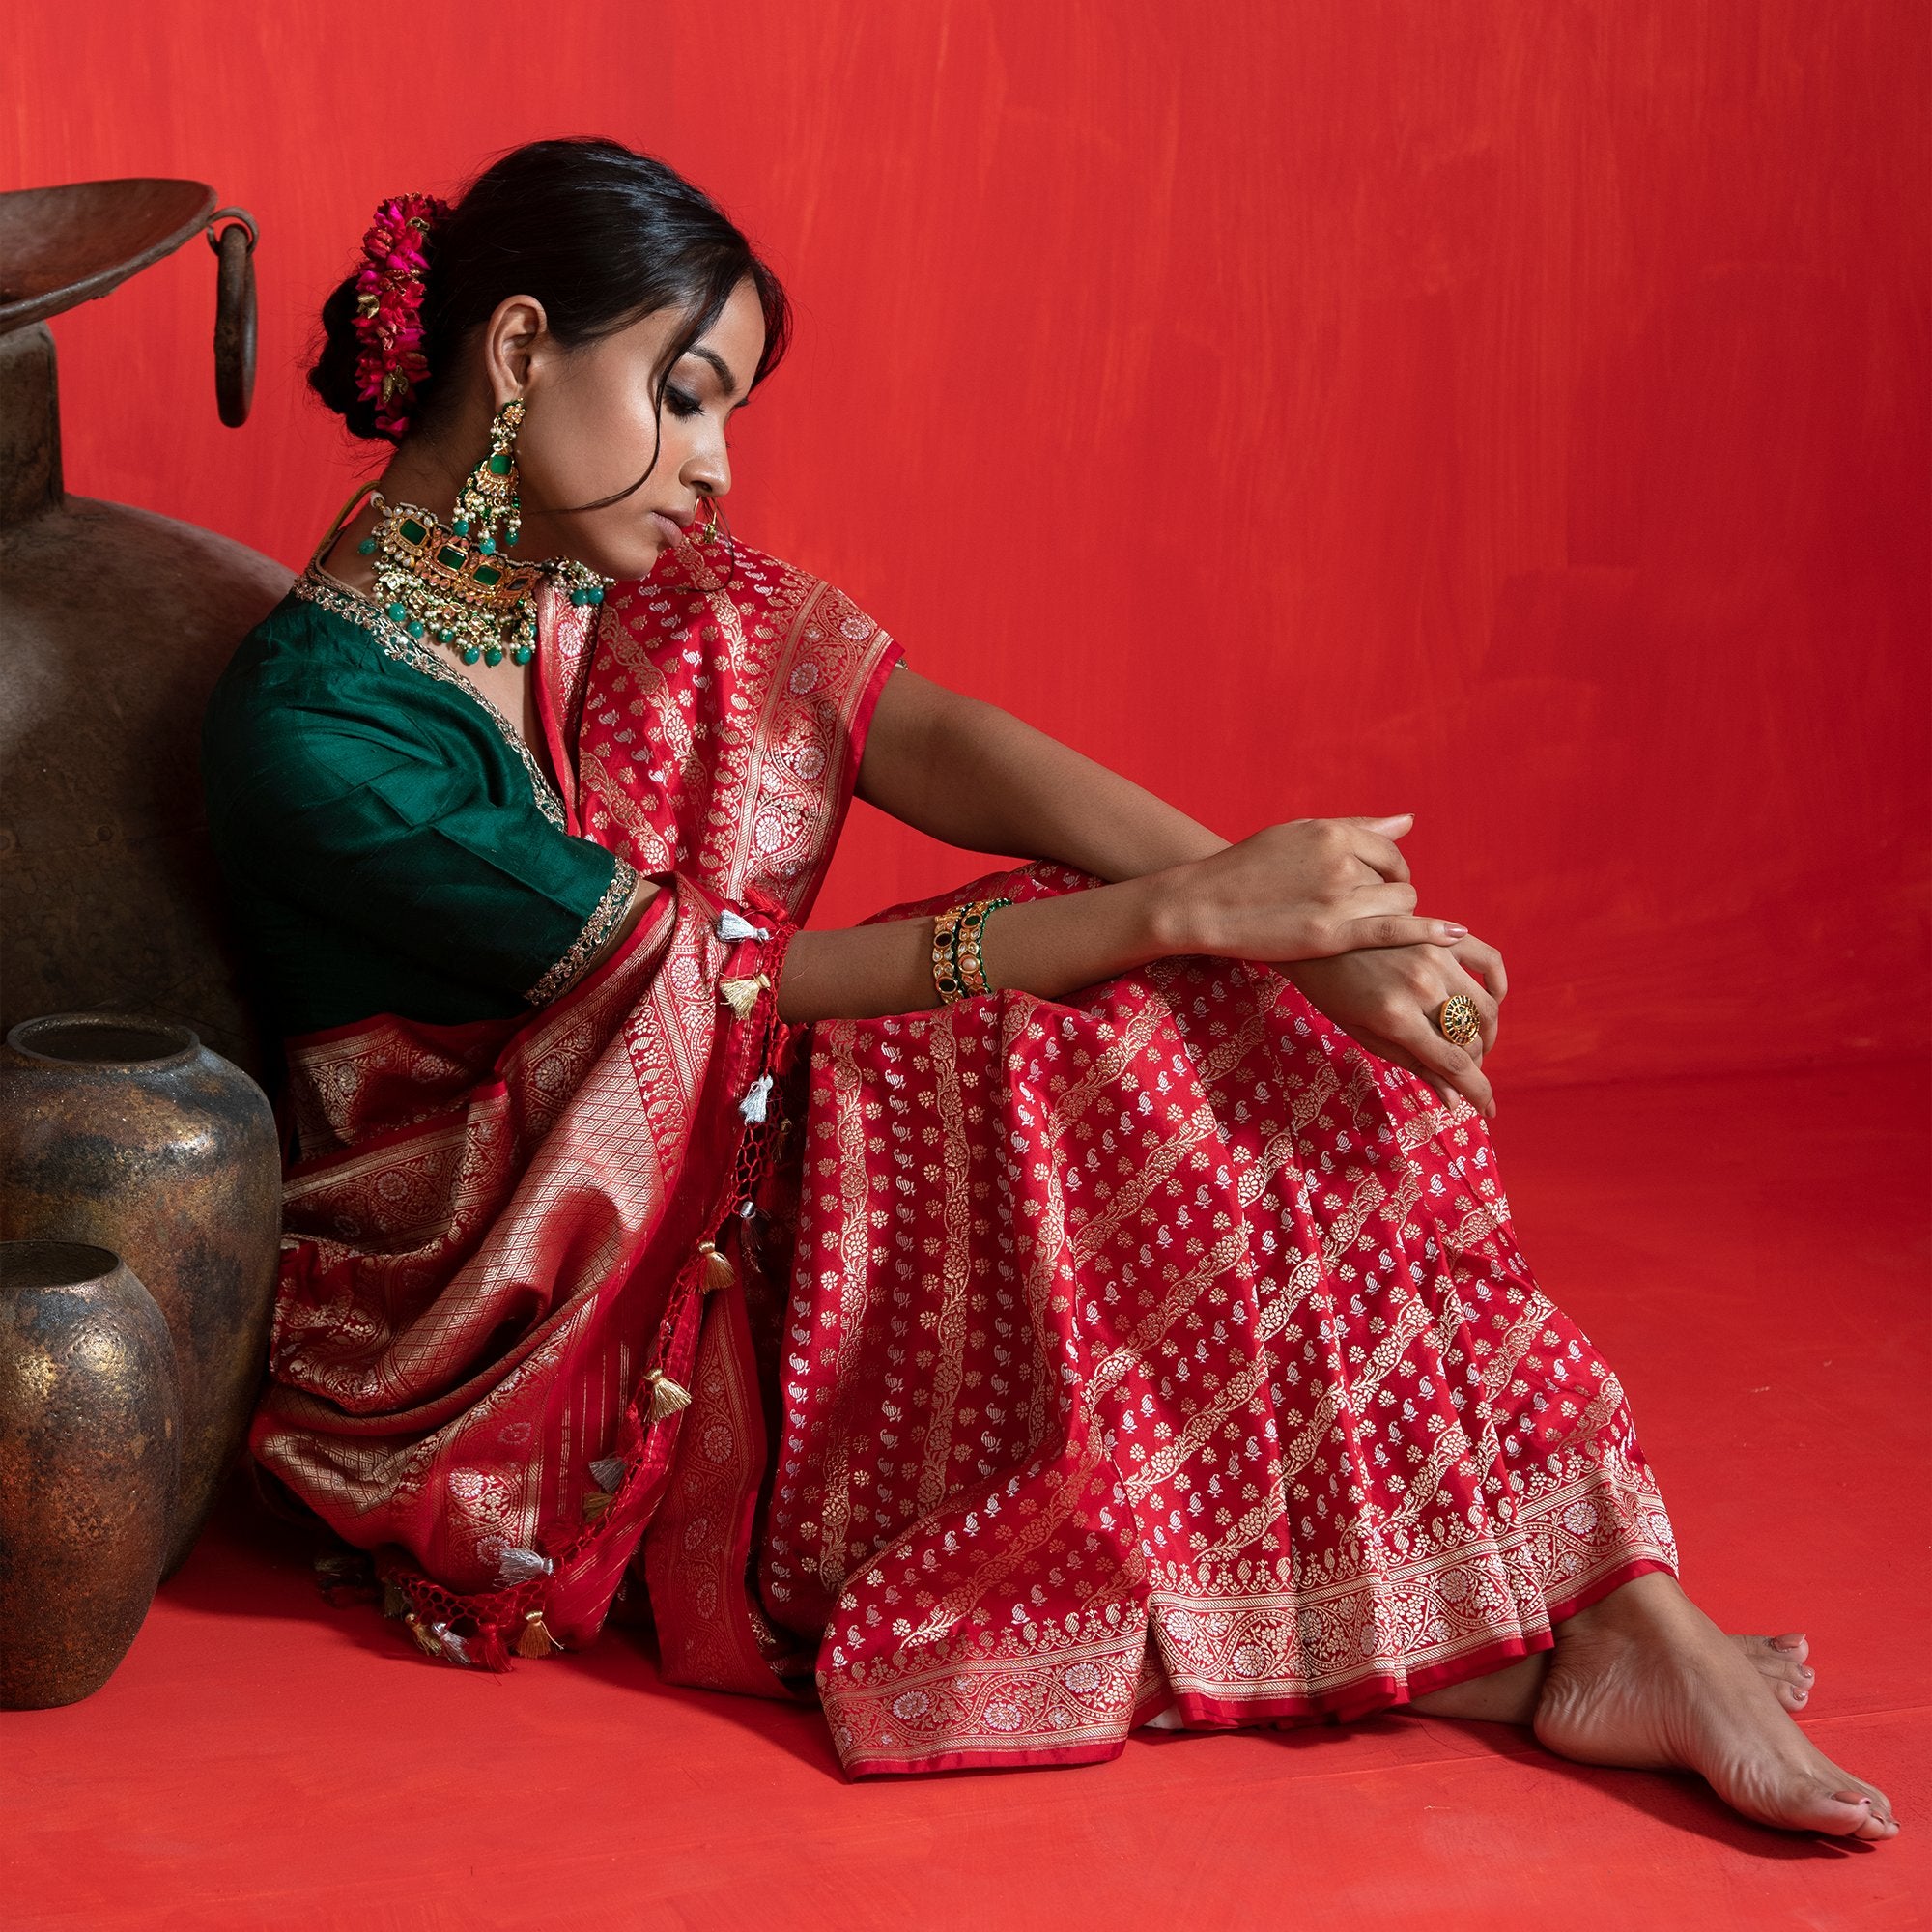 Utsav - Celebration through handcrafted textiles